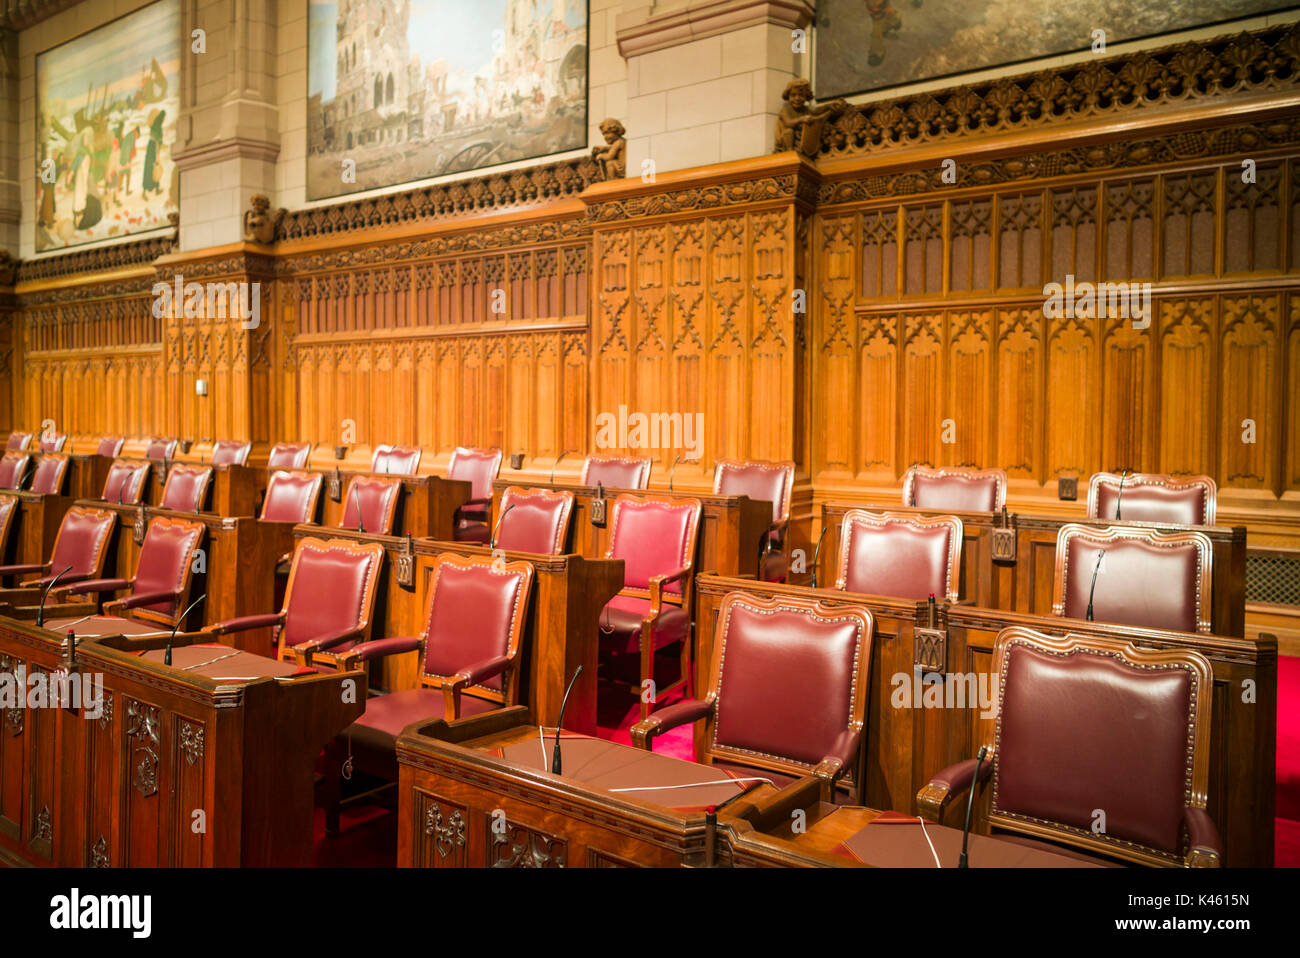 Canada, Ontario, Ottawa, capital of Canada, Canadian Parliament Building, Senate Chamber, interior Stock Photo